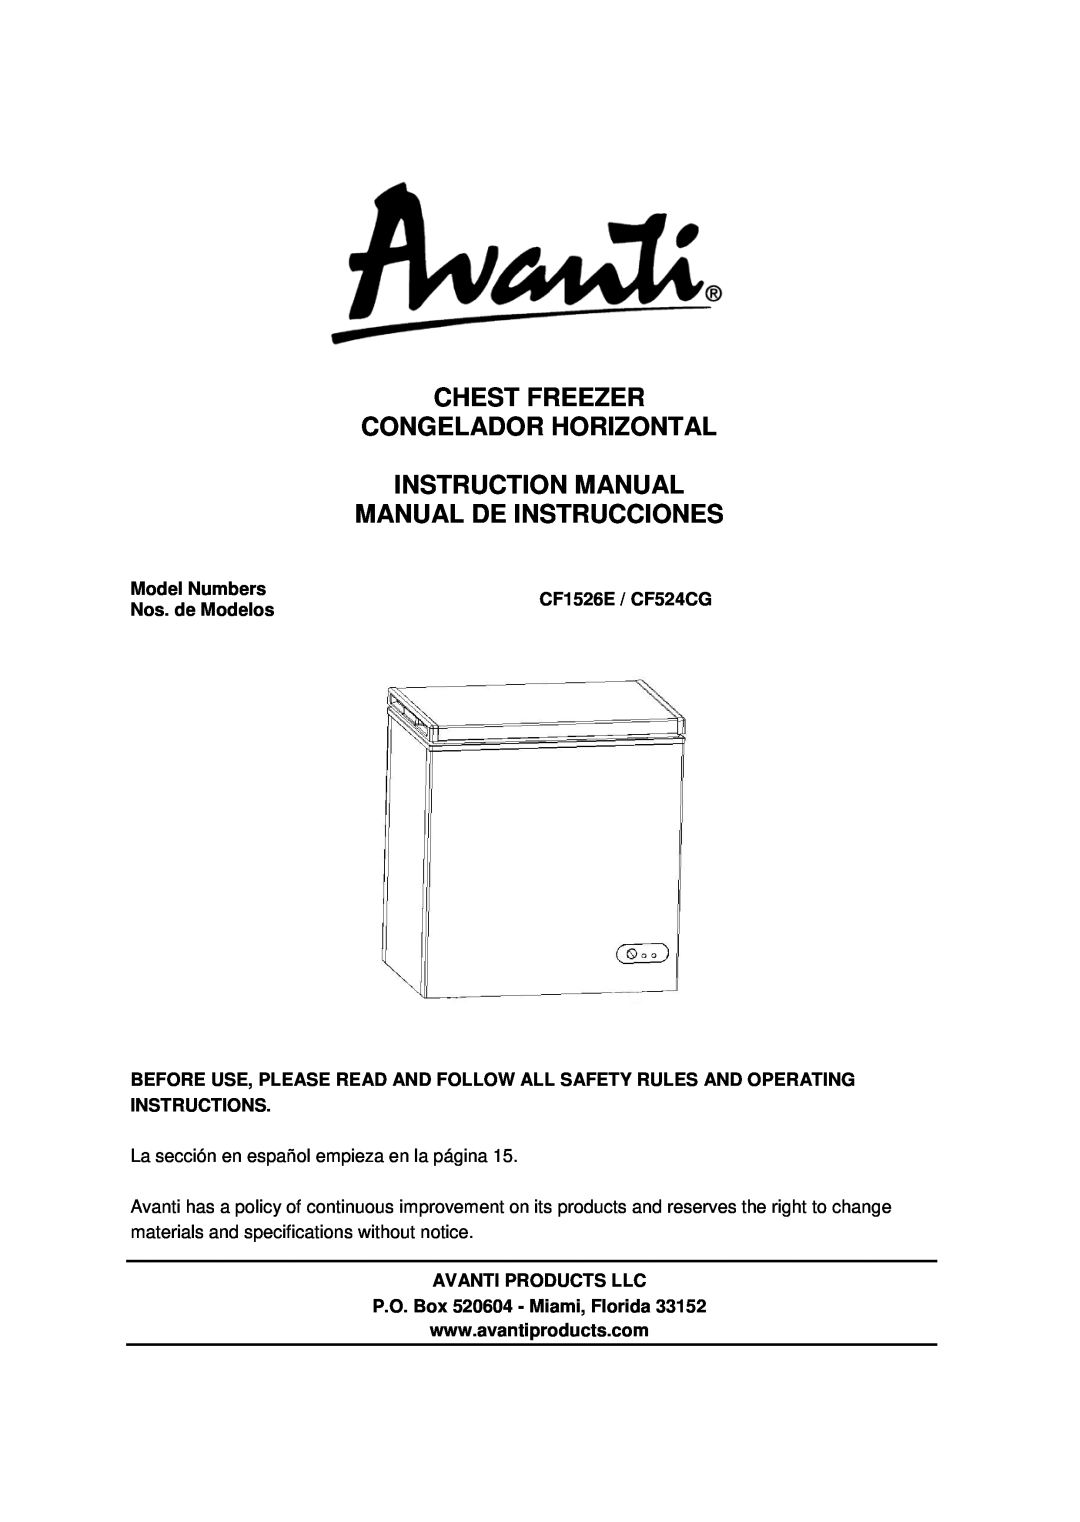 Avanti cf524cg instruction manual Chest Freezer Congelador Horizontal, Model Numbers, CF1526E / CF524CG, Nos. de Modelos 